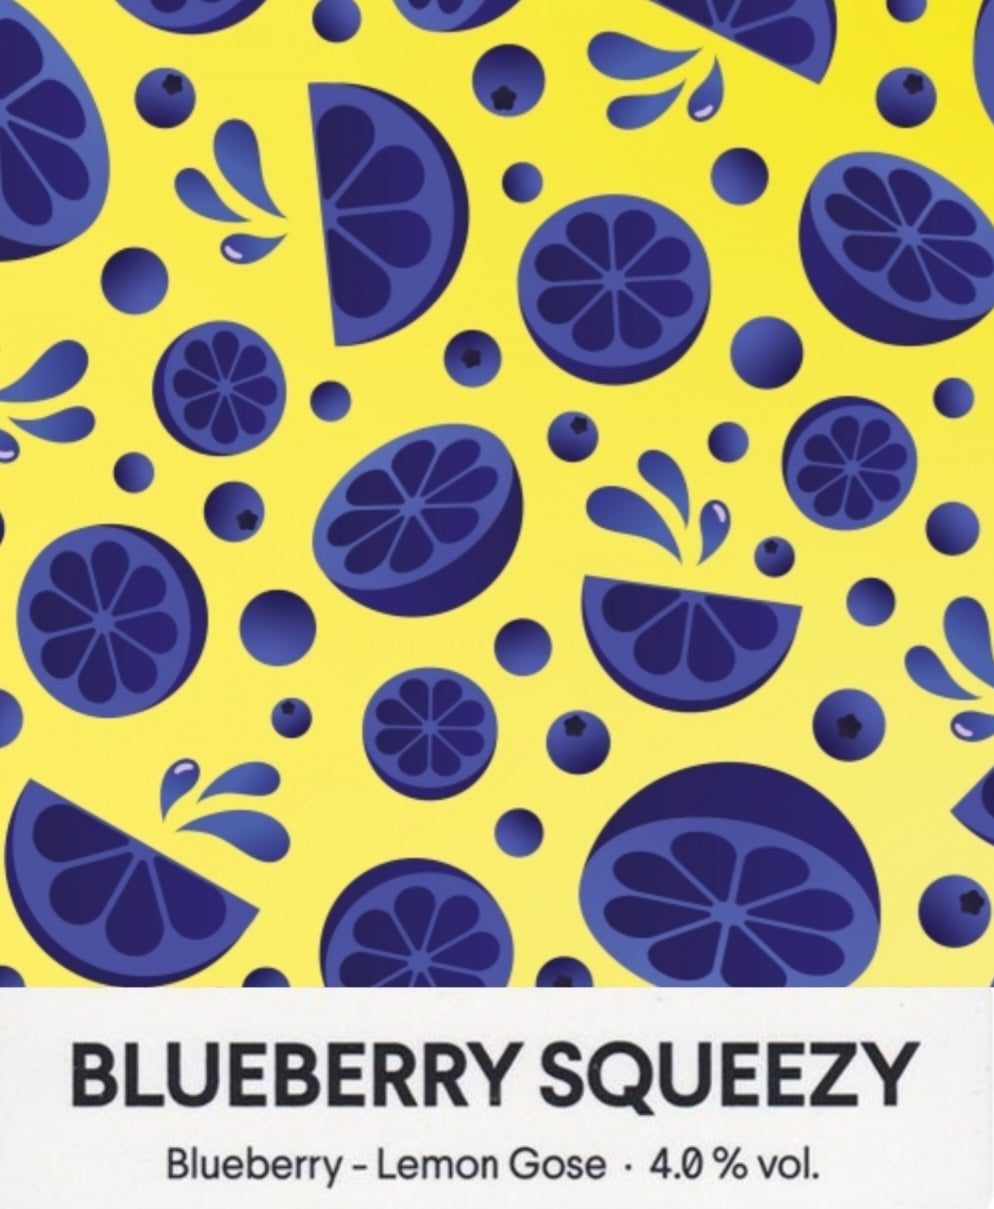 ETKO Brewing Blueberry Squeezy